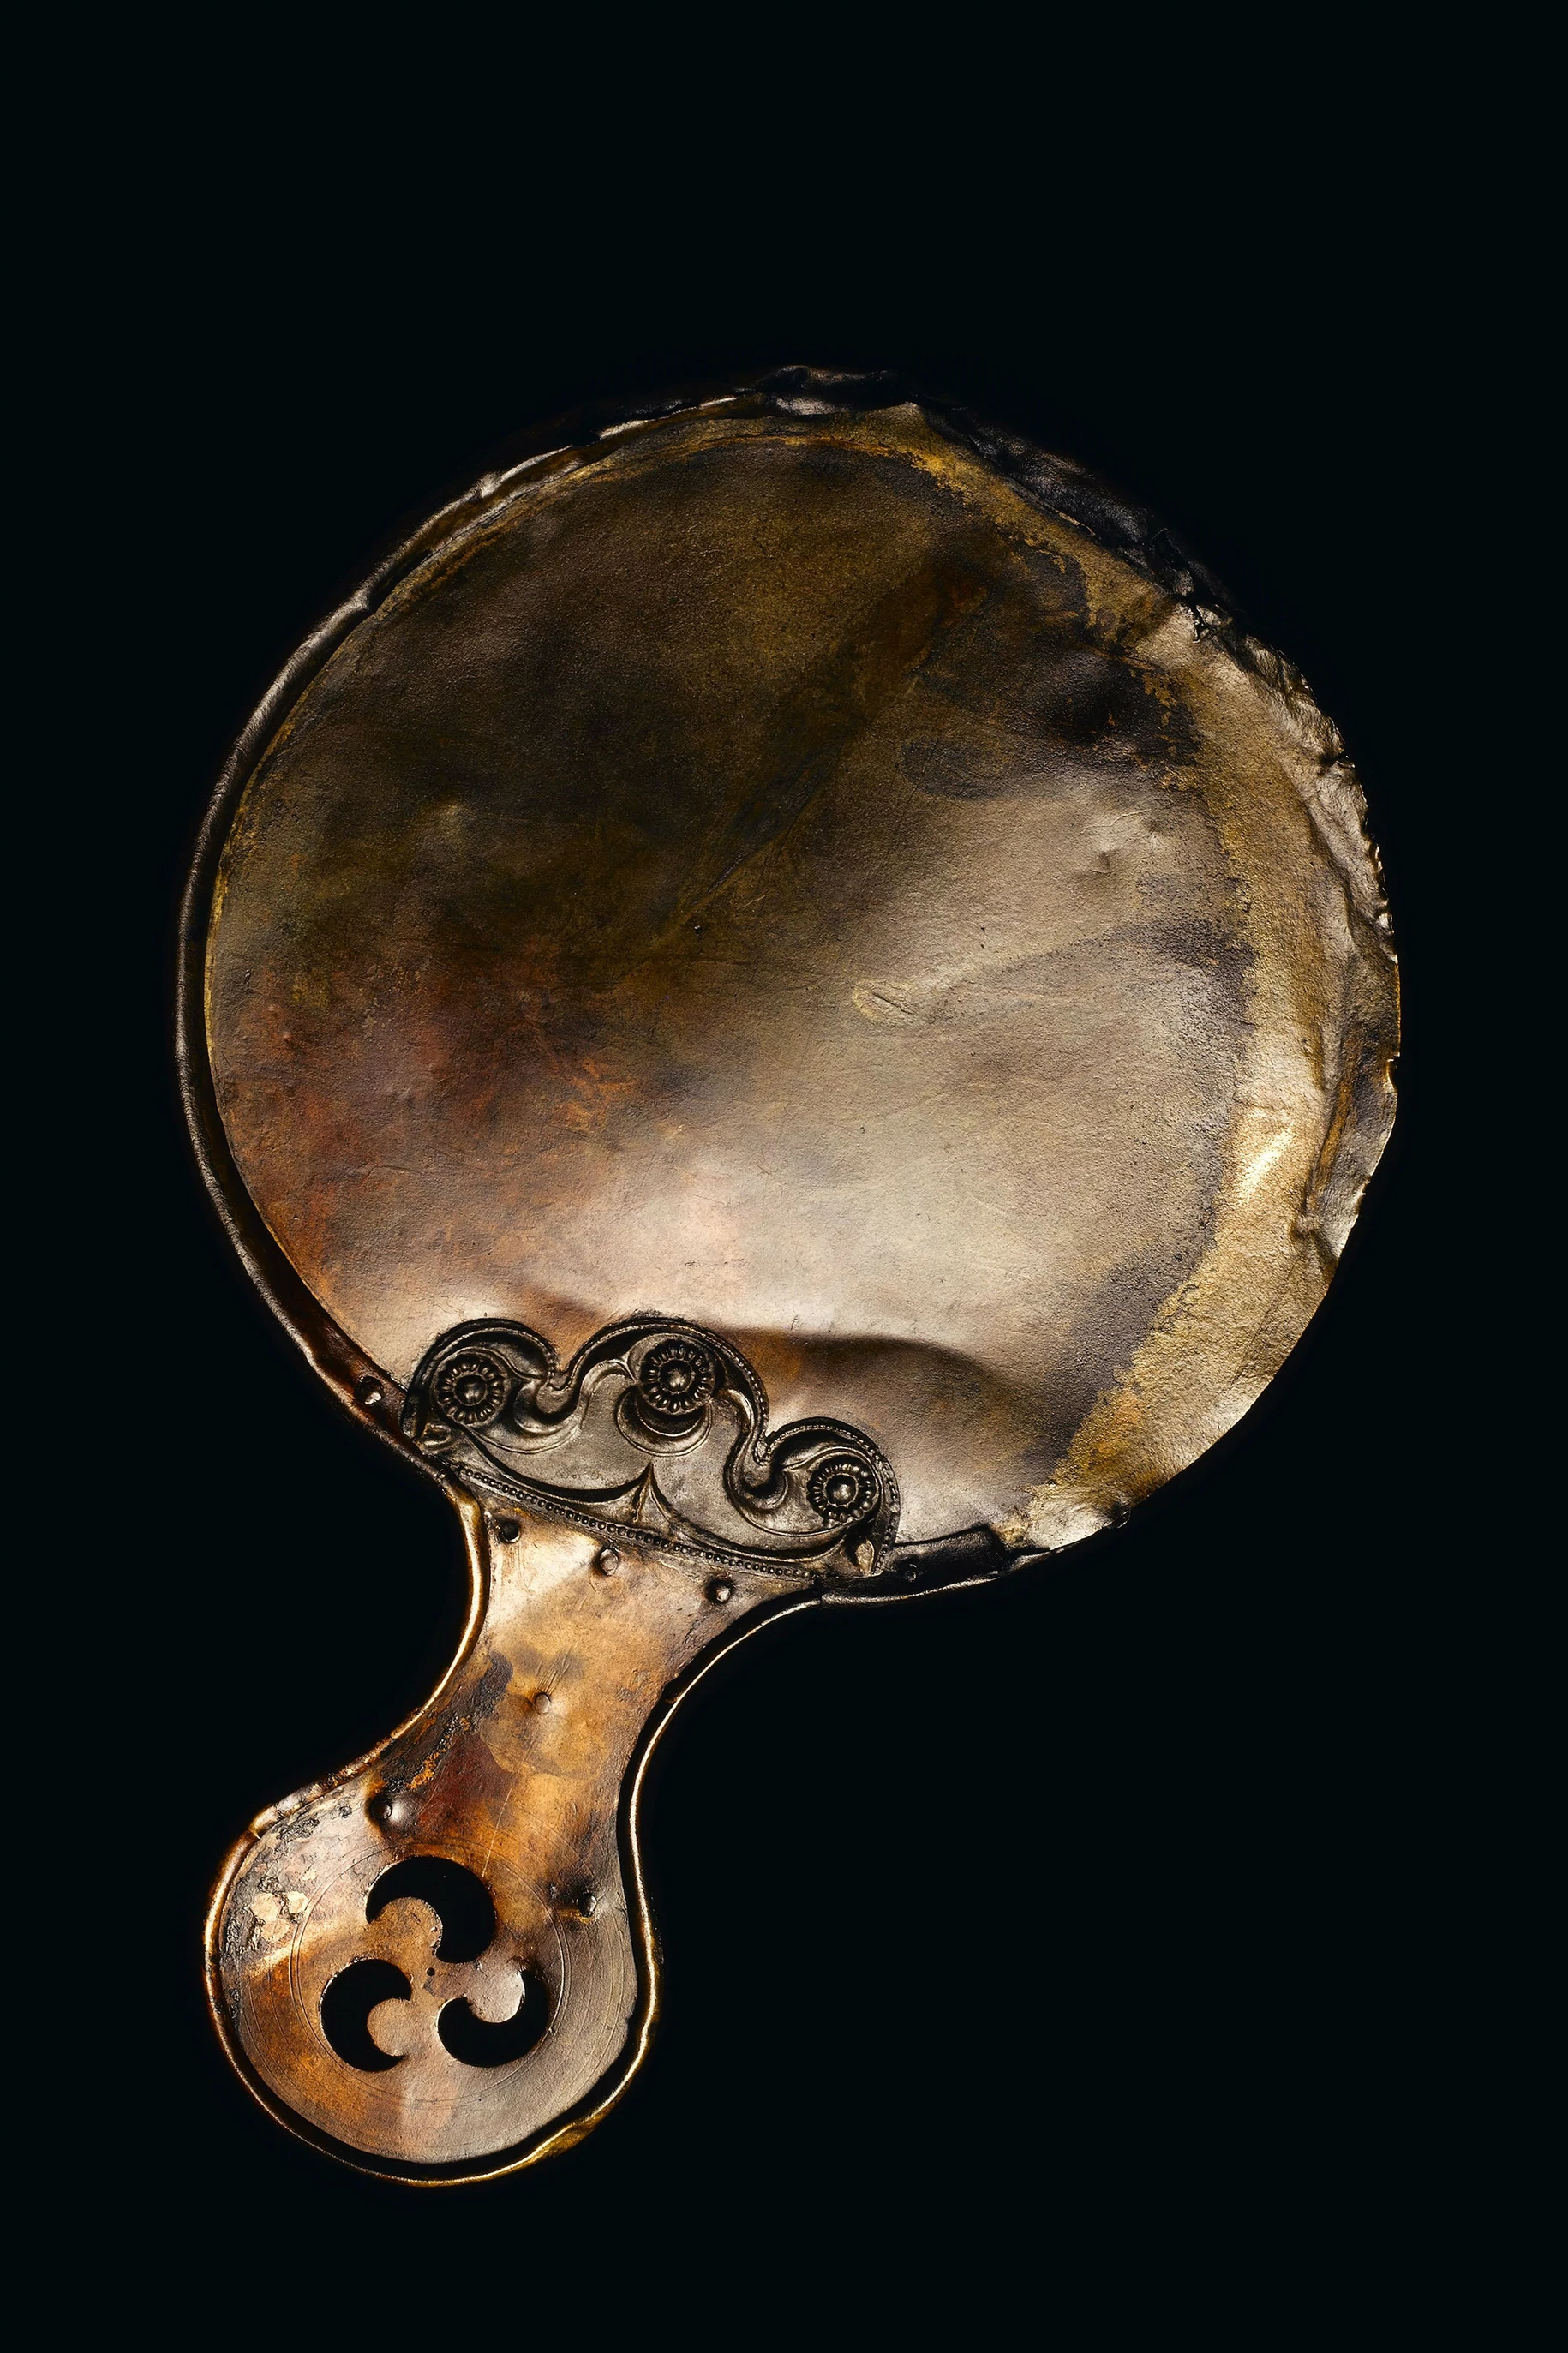 The Balmaclellan Mirror, Iron Age